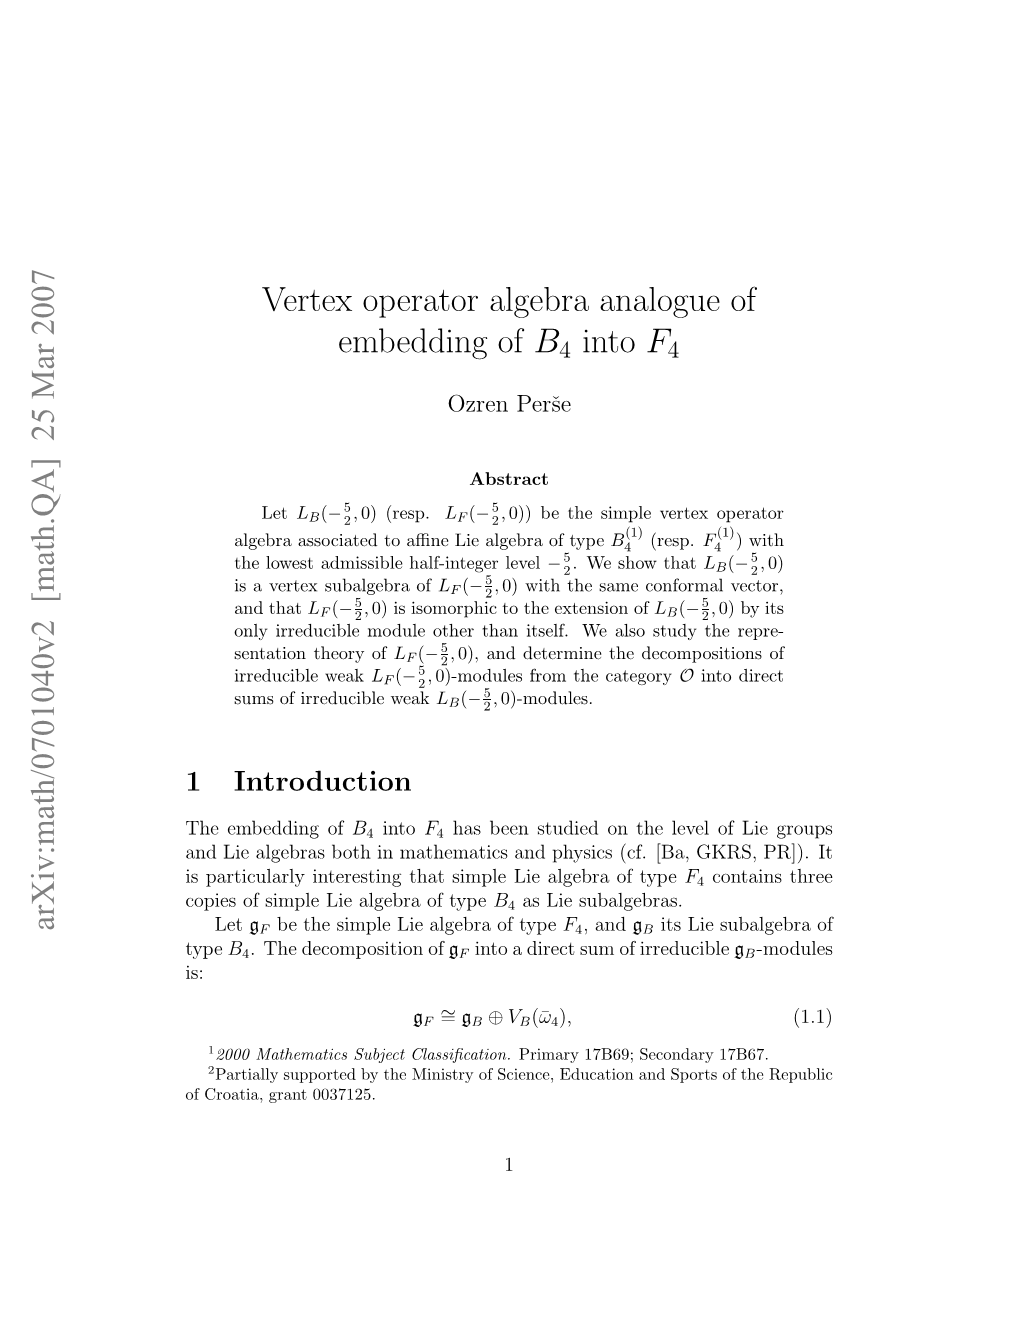 Vertex Operator Algebra Analogue of Embedding of B4 Into F4